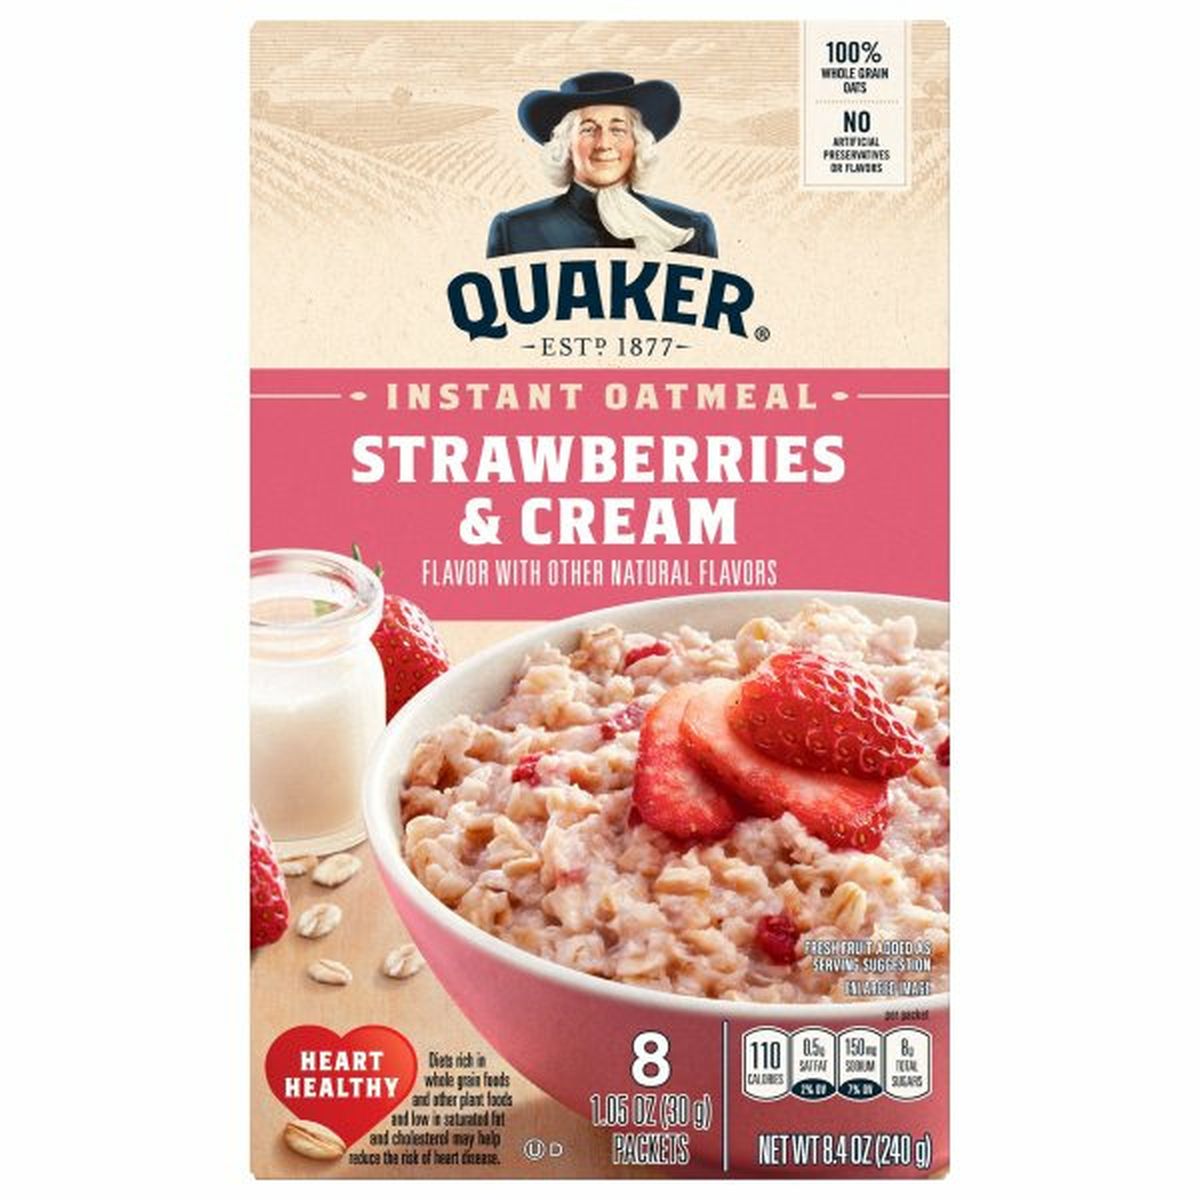 Calories in Quaker Oatmeal, Instant, Strawberries & Cream